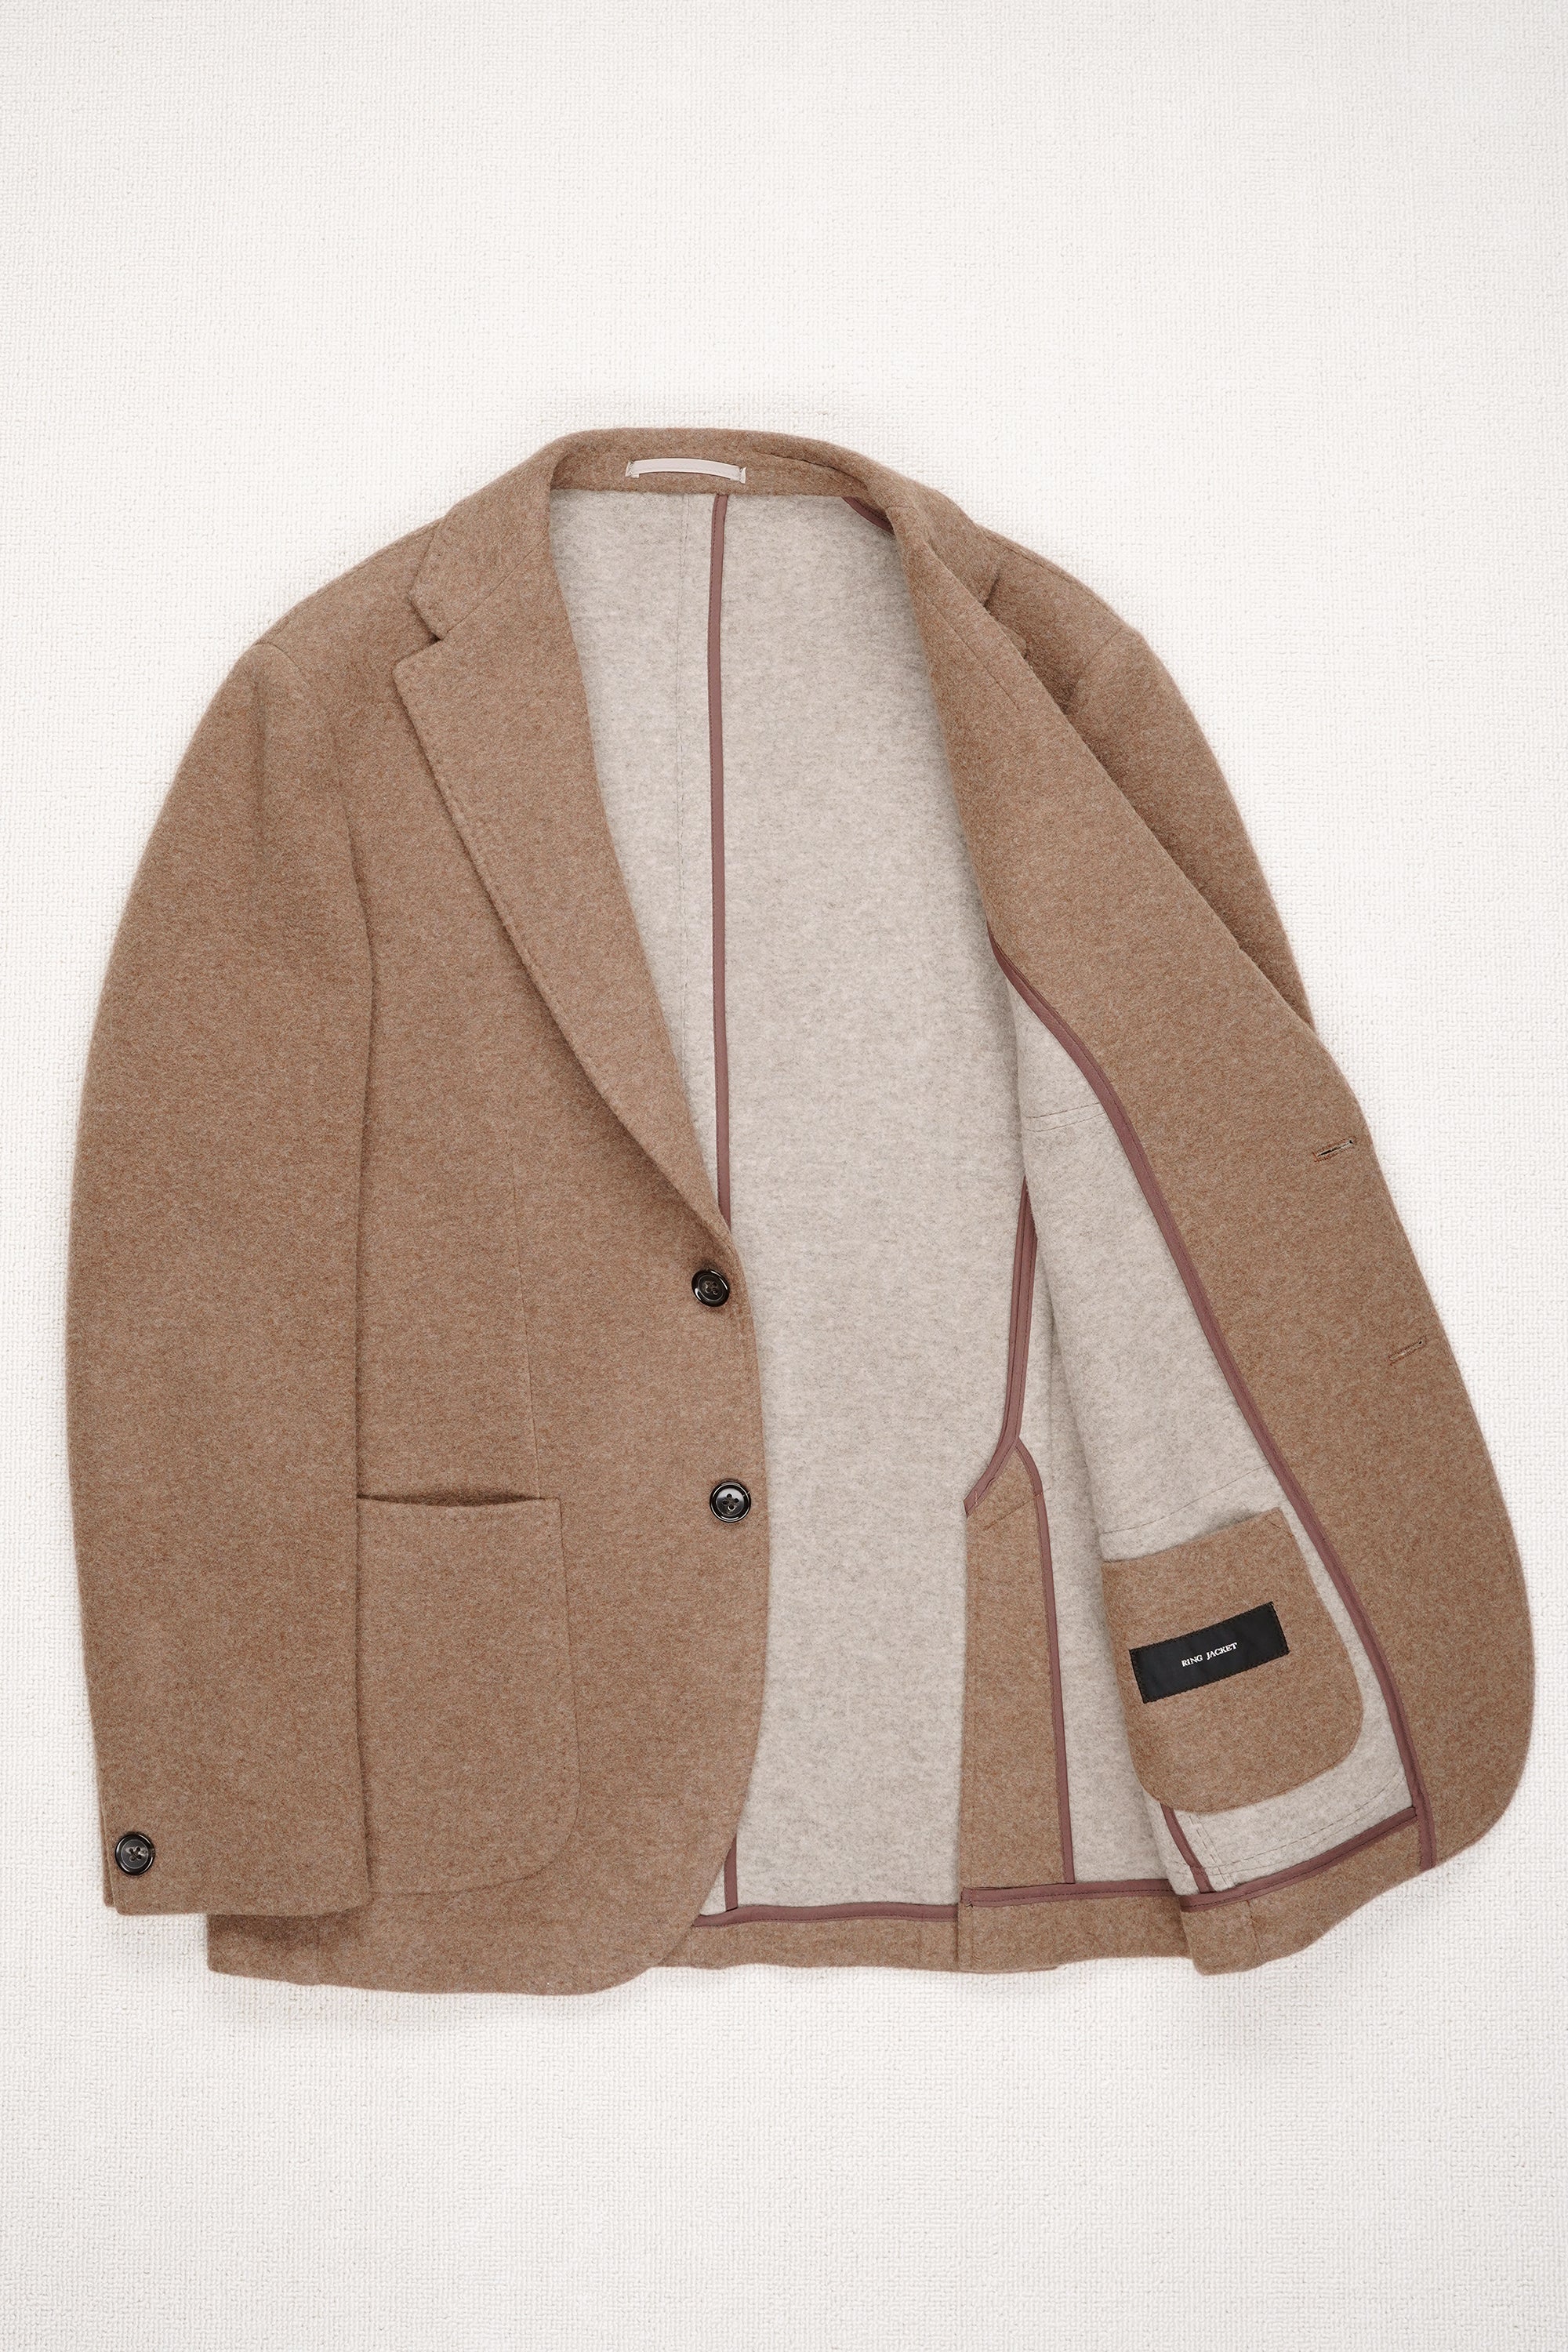 Ring Jacket Model 297 Brown Wool/Cashmere/Nylon Sport Coat